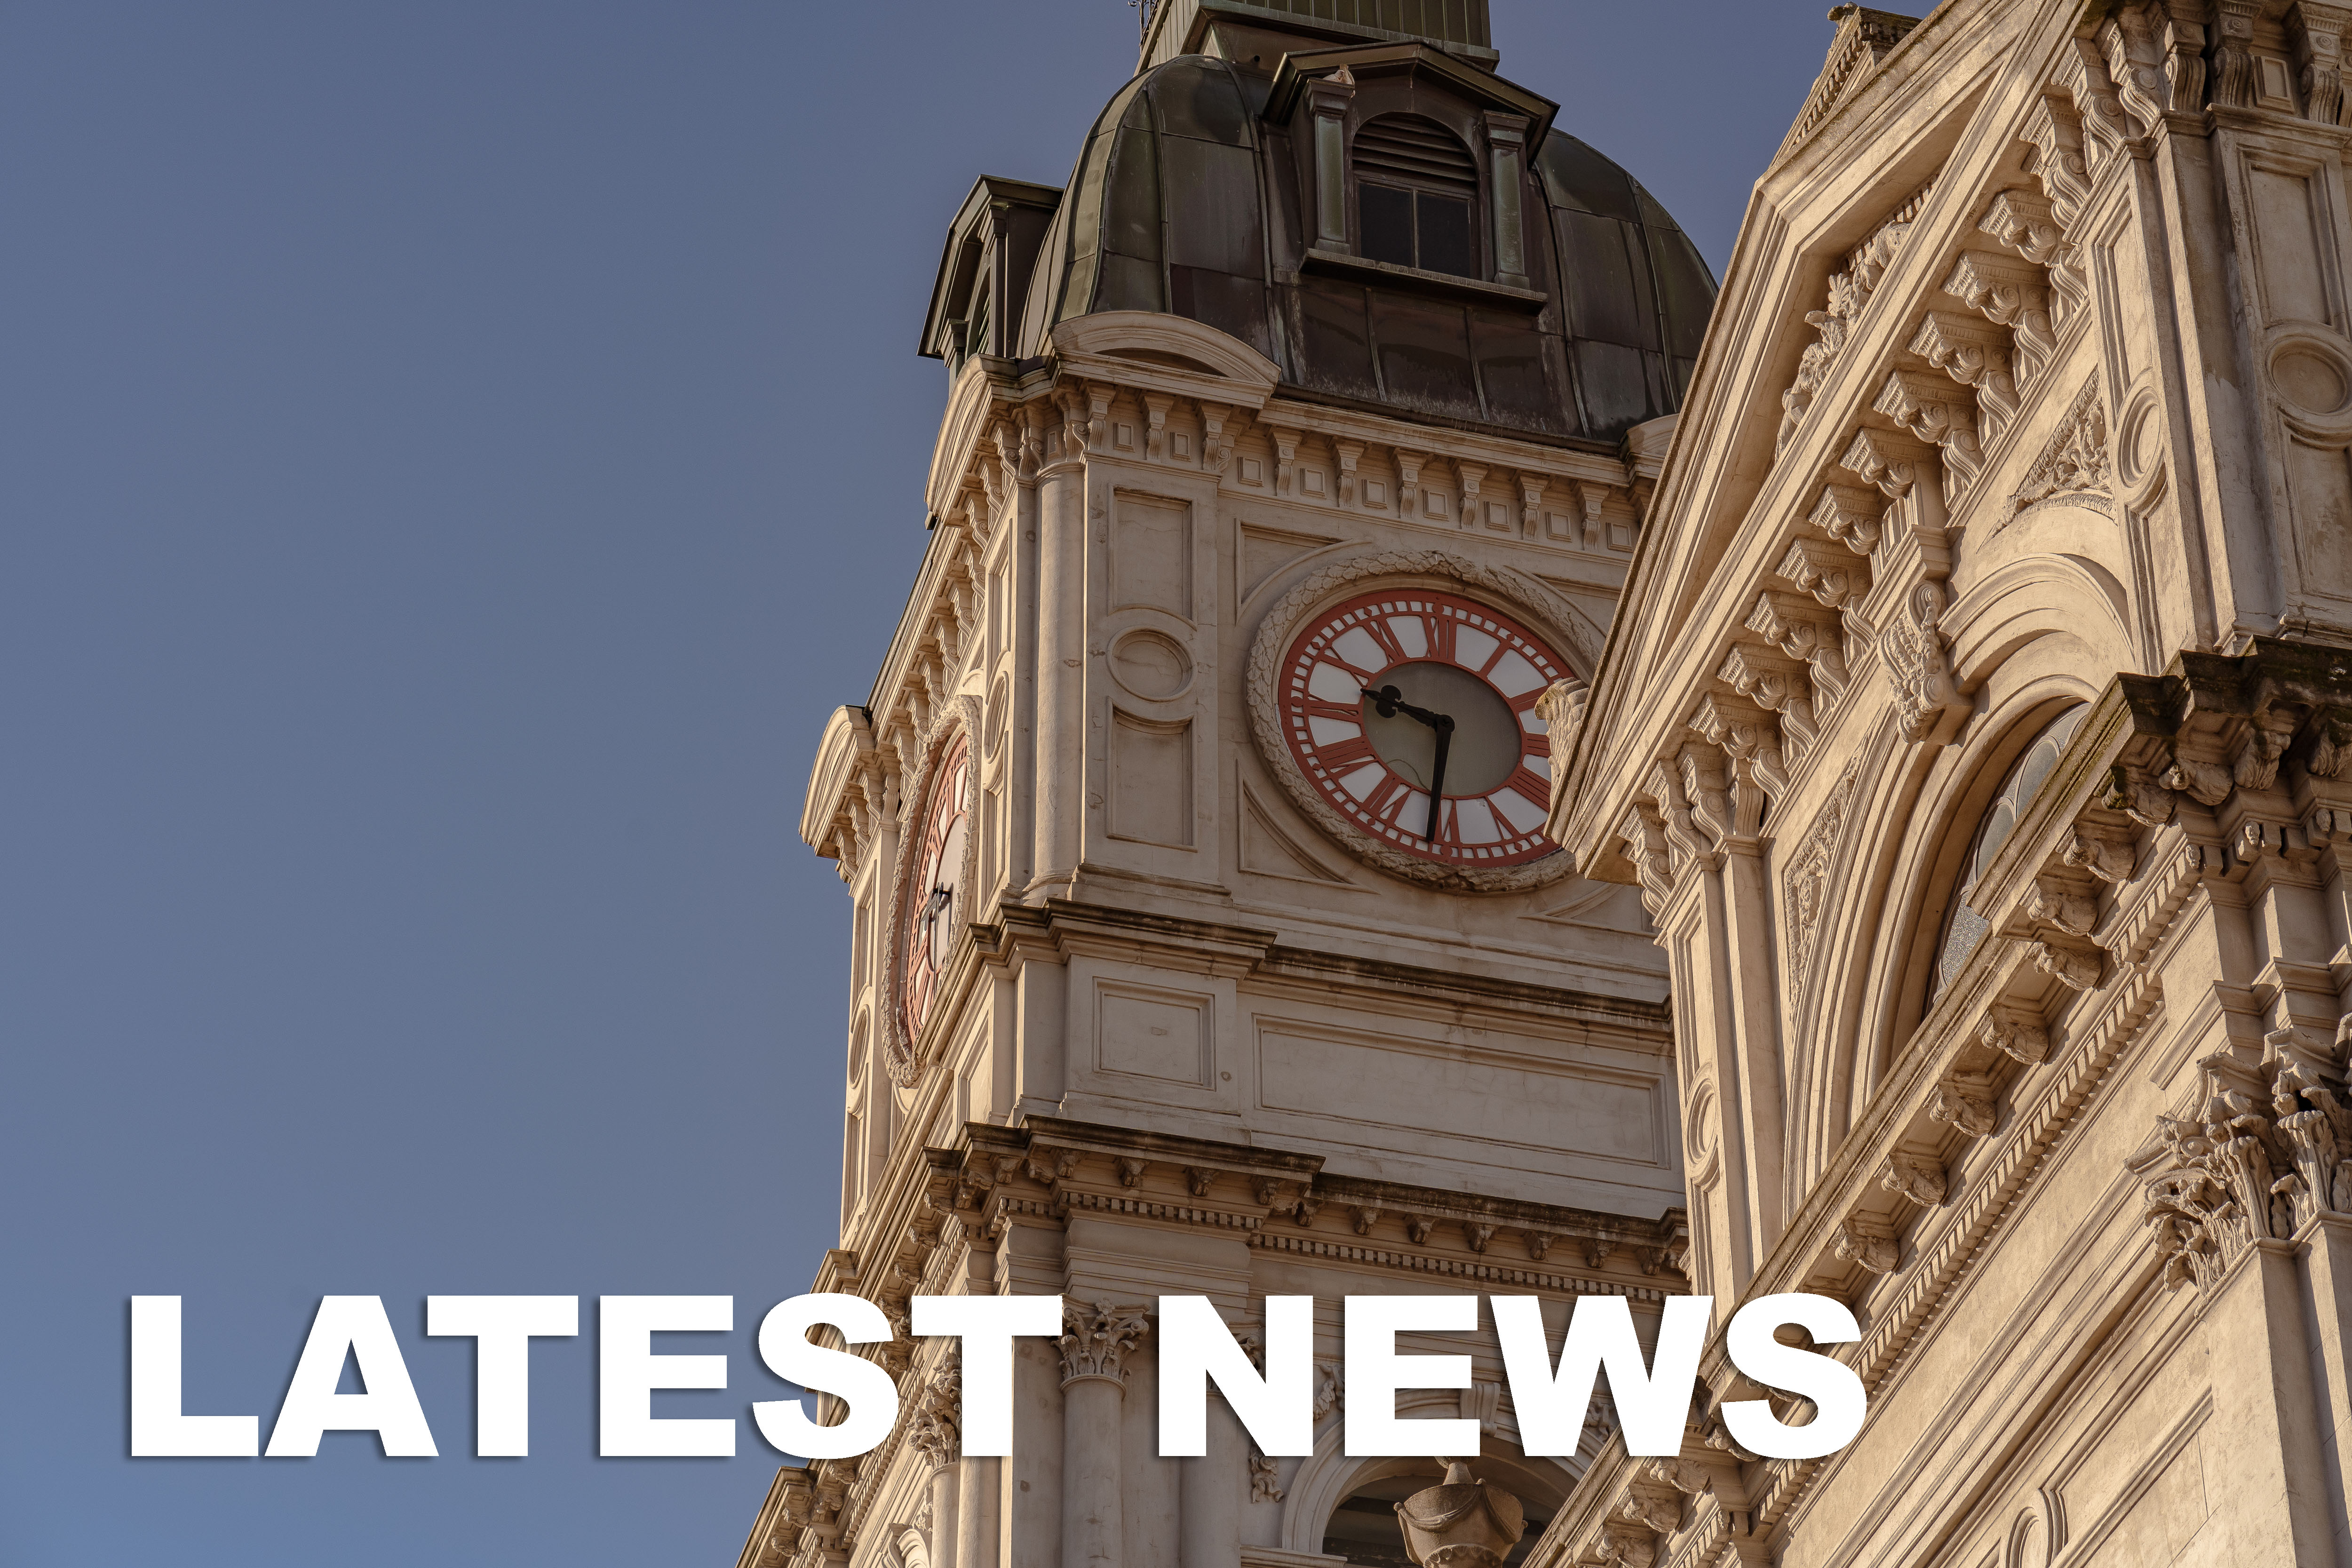 Image of Ballarat Town Hall with Latest News inset